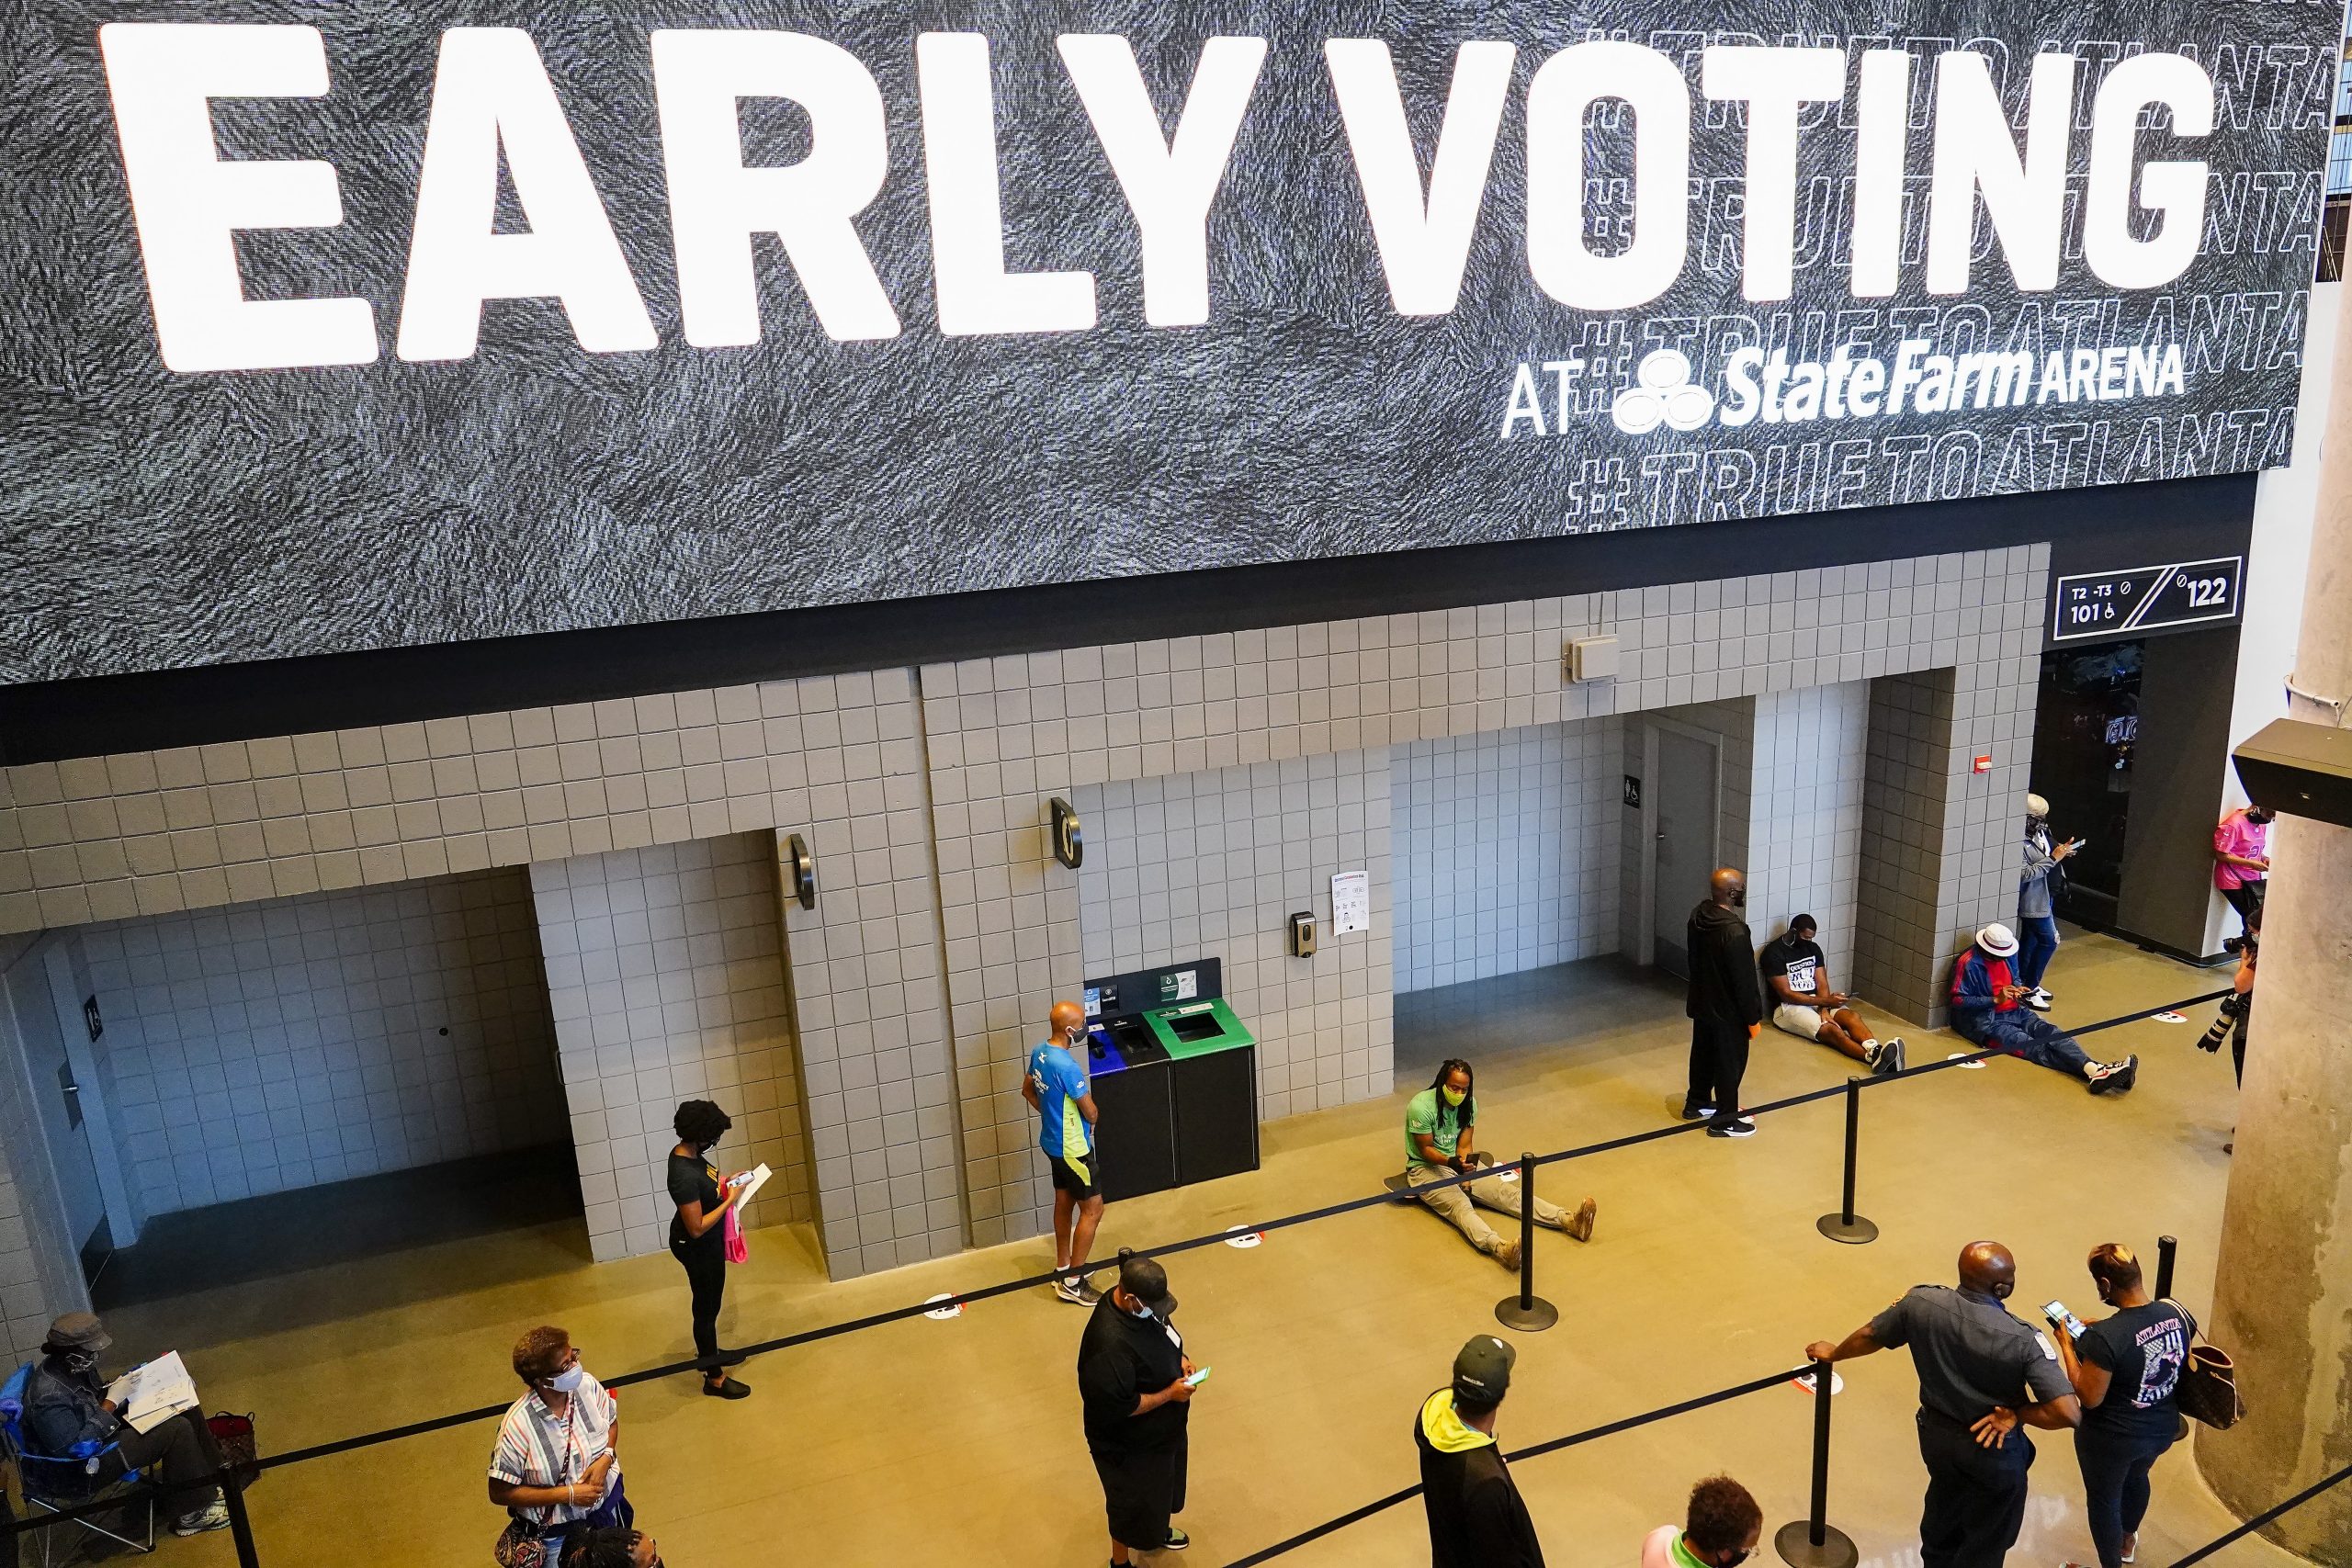 2020 election: Atlanta Hawks turn State Farm Arena into voting station